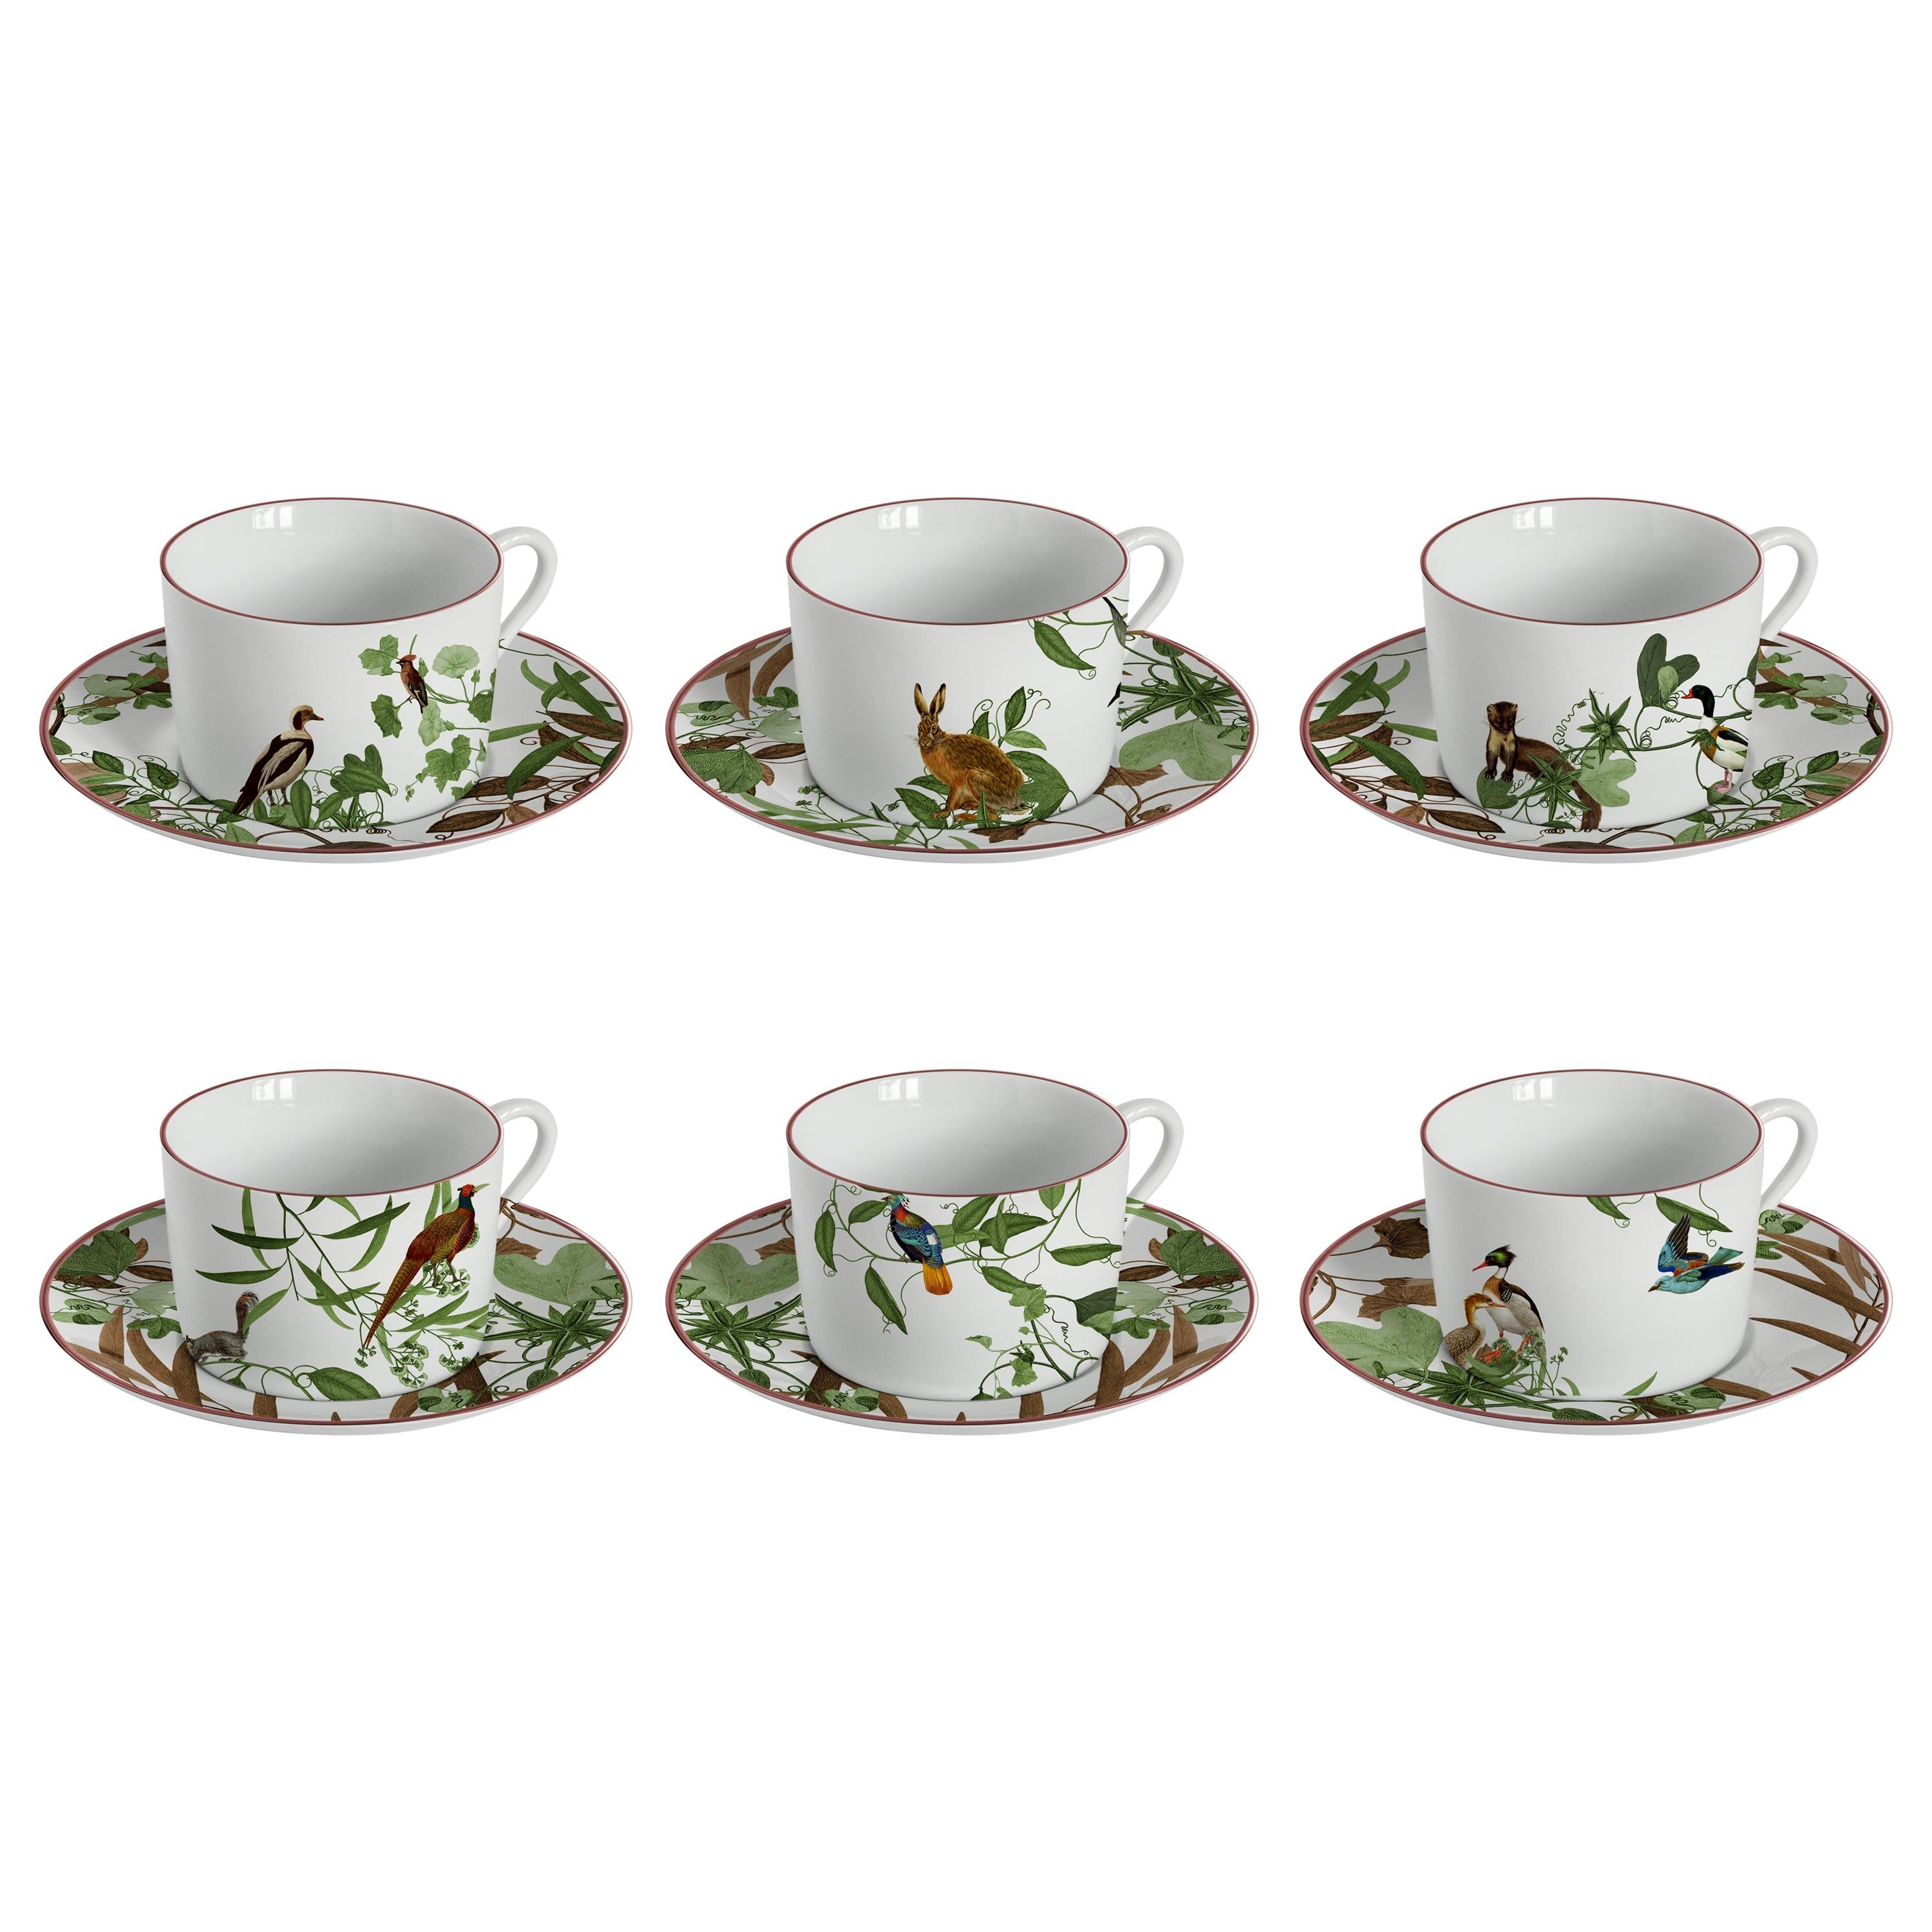 Mediterraneo, Tea Set with Six Contemporary Porcelains with Decorative Design